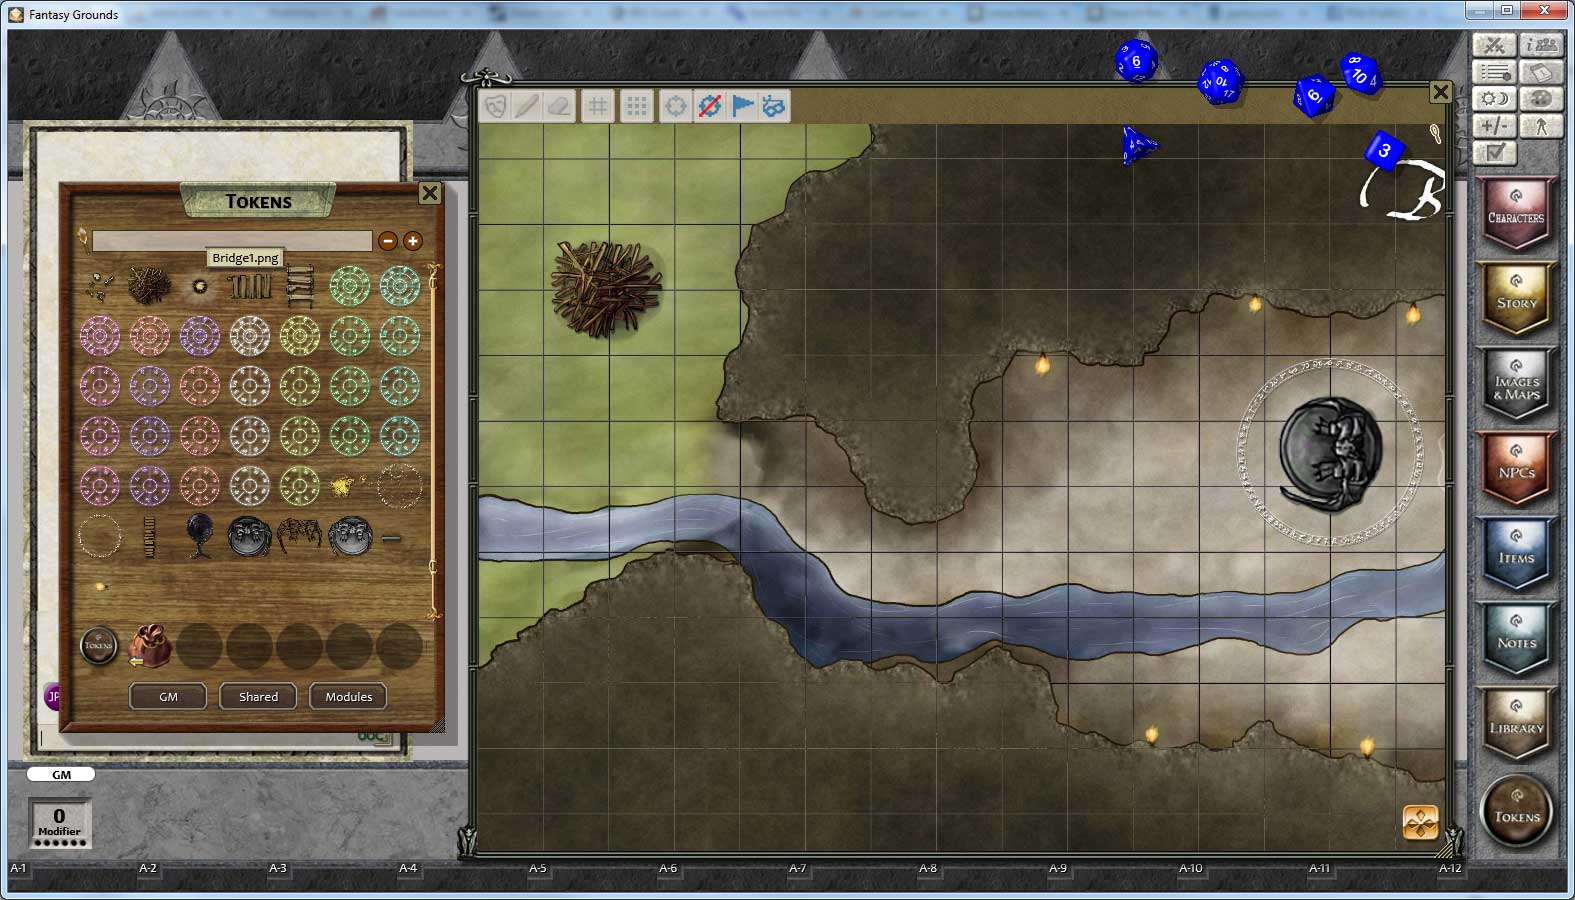 Fantasy Grounds - Rite Publishing Fantastic Maps - Lairs Pack screenshot